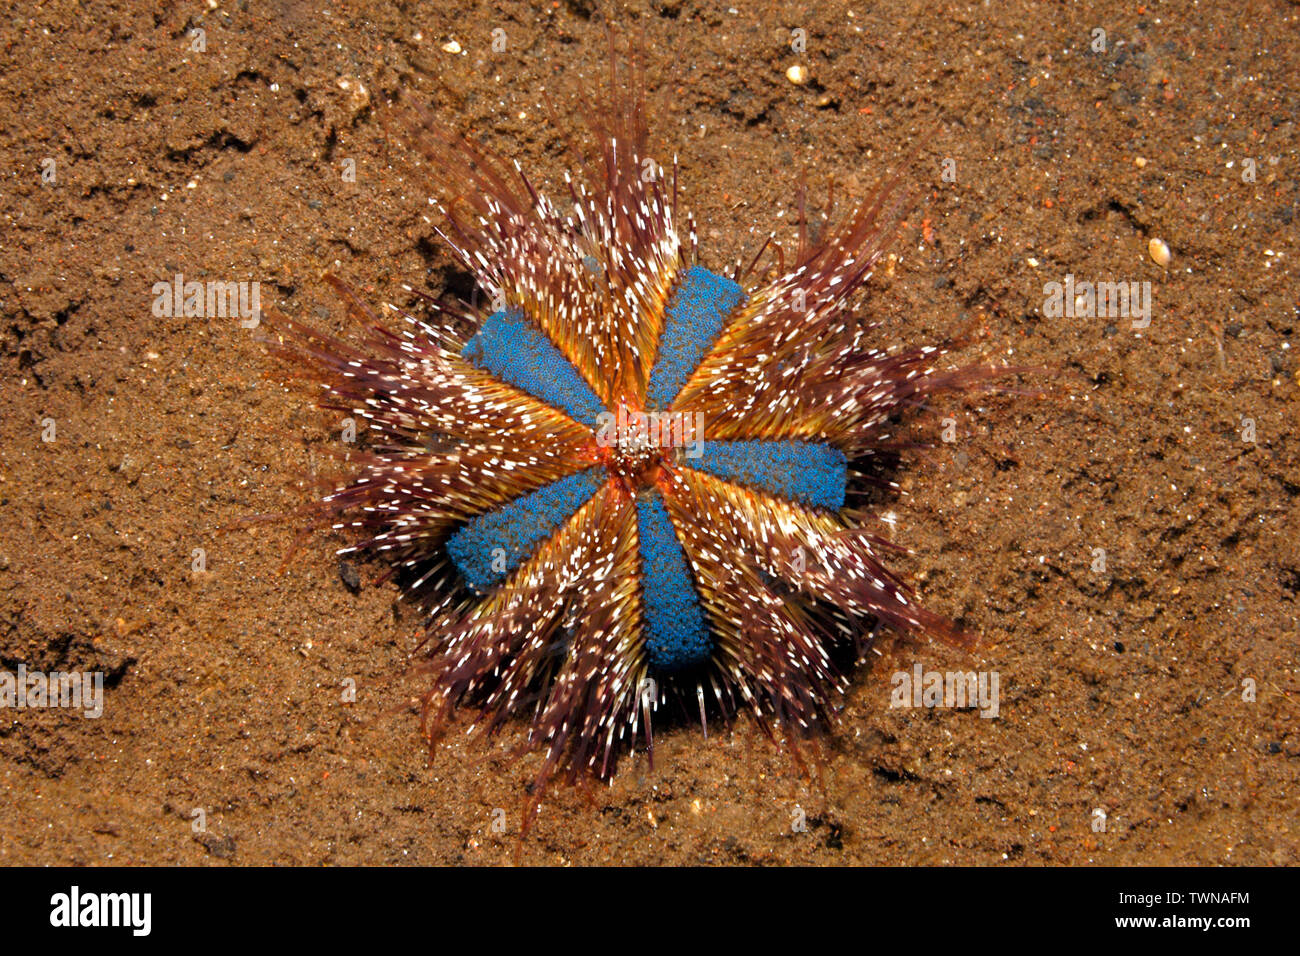 Azul esmoquin, Erizo Erizo globulares, Globe Urchin, estuche de joyería o Erizo de mar, Mespilia globulus. Tulamben, Bali, Indonesia. Bali, mar, océano Índico Foto de stock